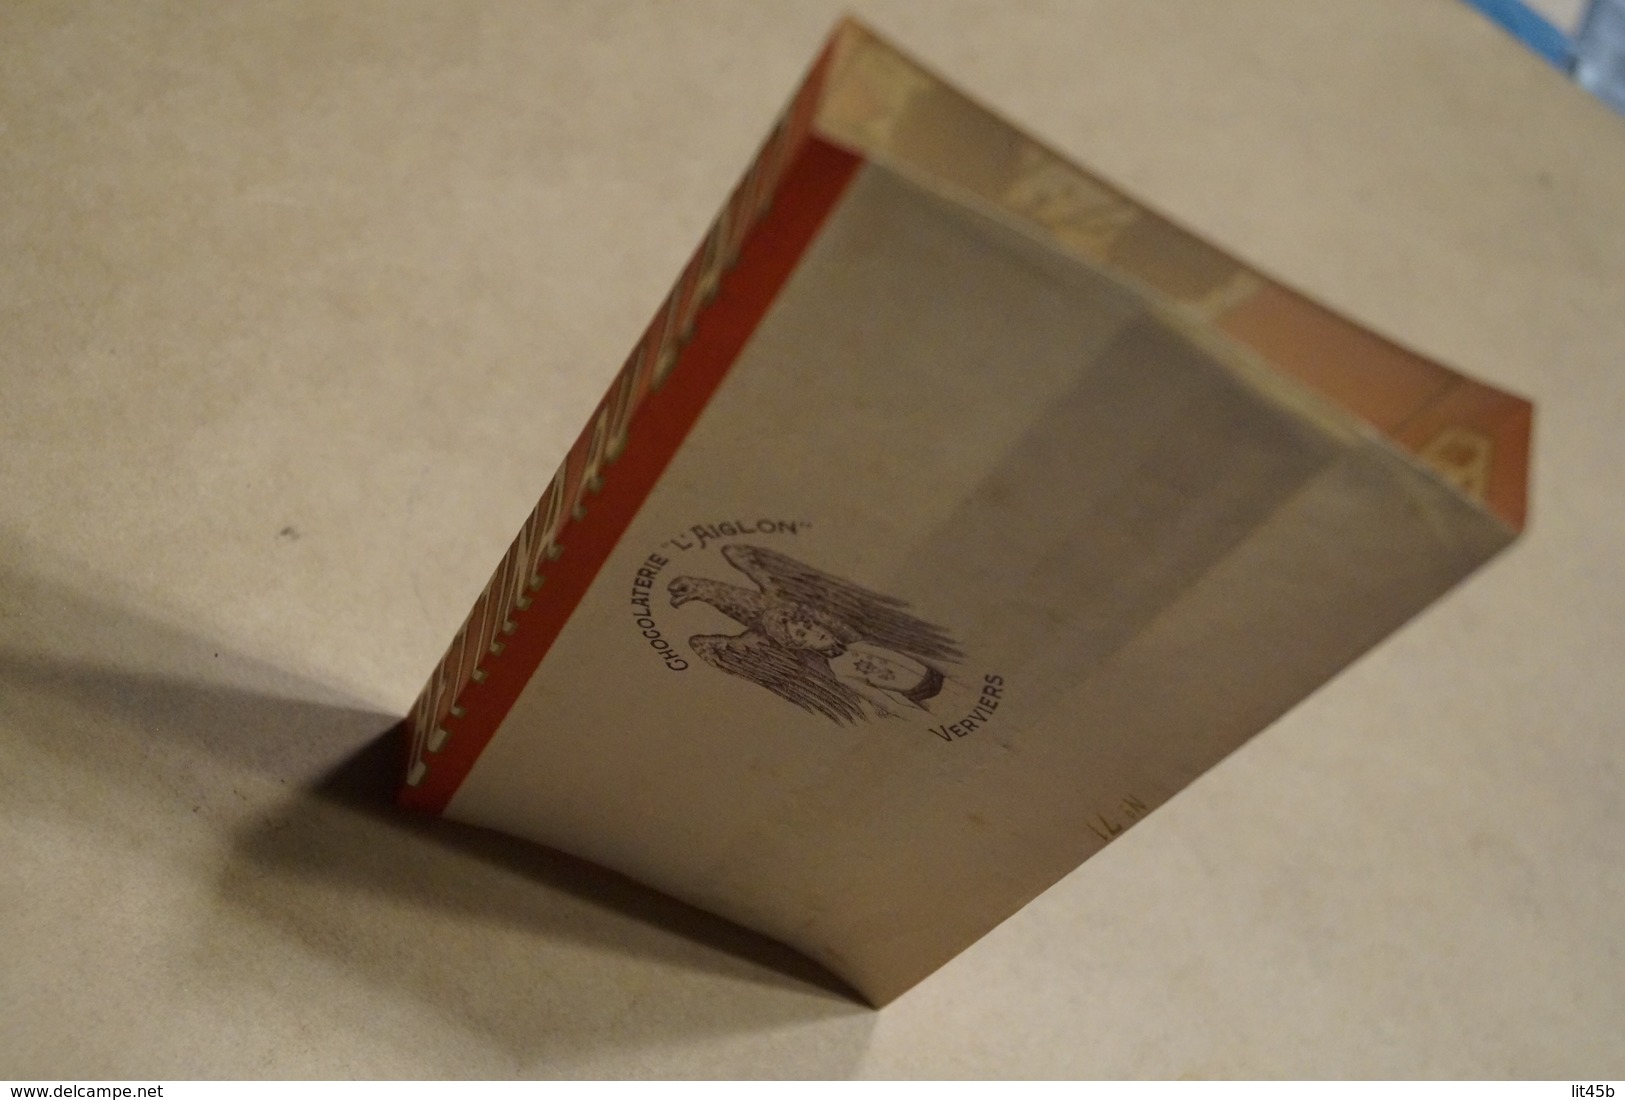 Ancien Emballage Publicitaire Originale,Chocolat Bettina,Aiglon,Verviers,18 Cm. Sur 11 Cm.collector - Chocolat